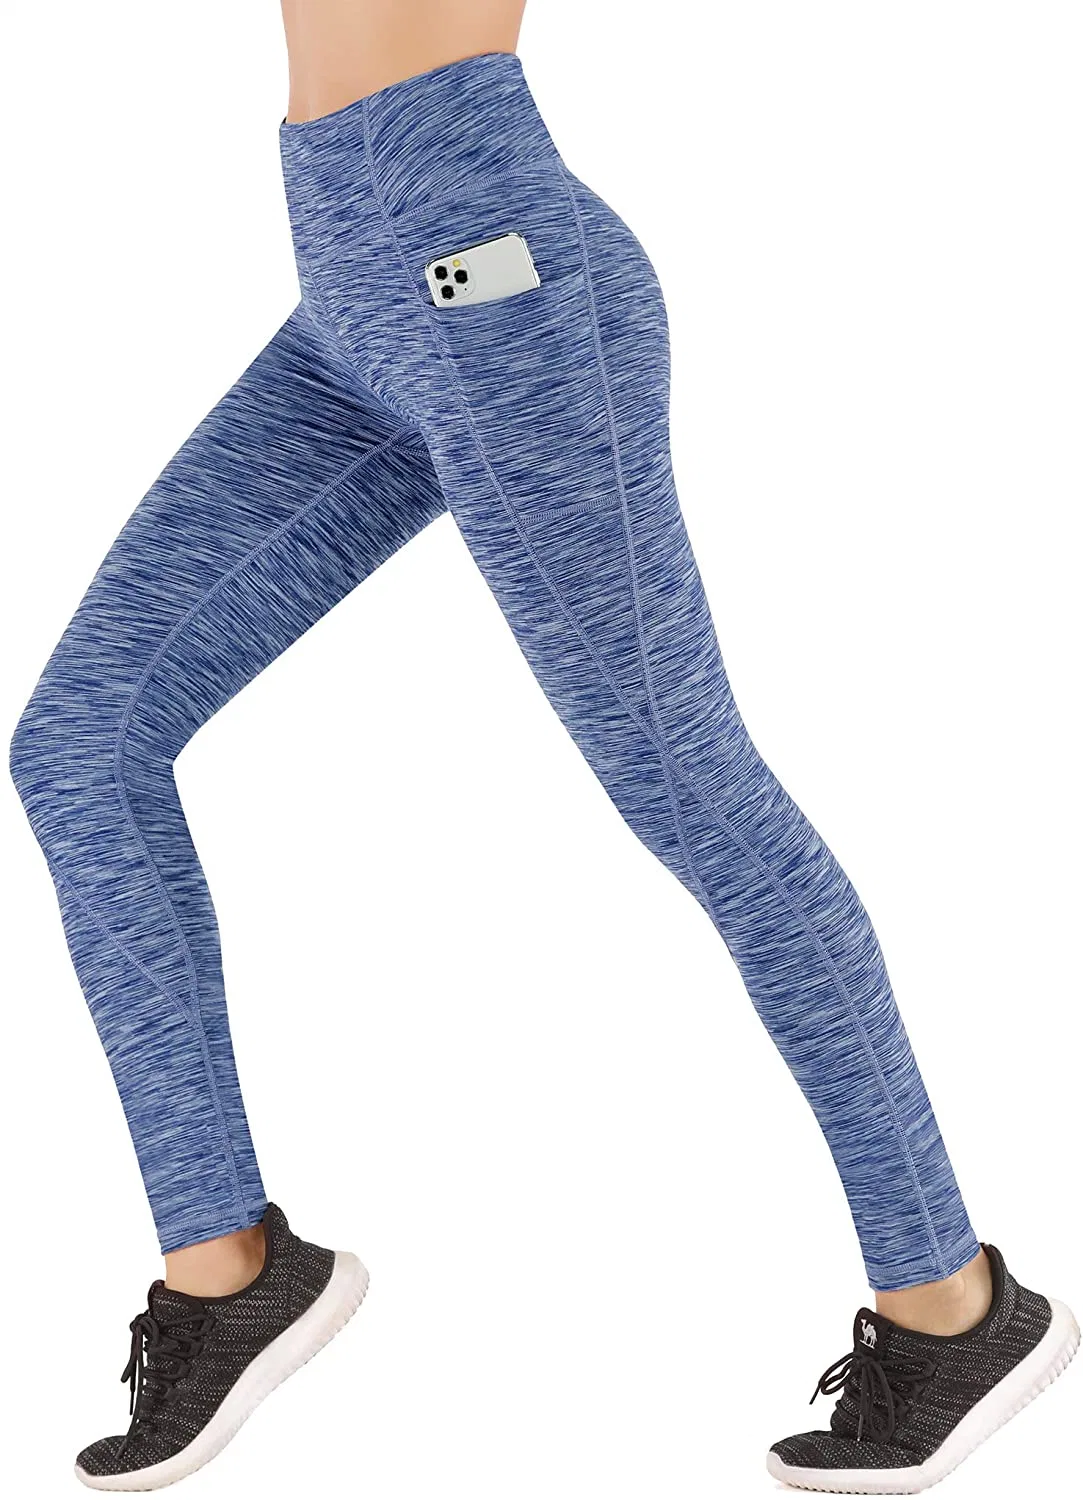 Colorida ropa ropa deportiva Fitness gimnasio en casa Legging pantalones de yoga desgaste